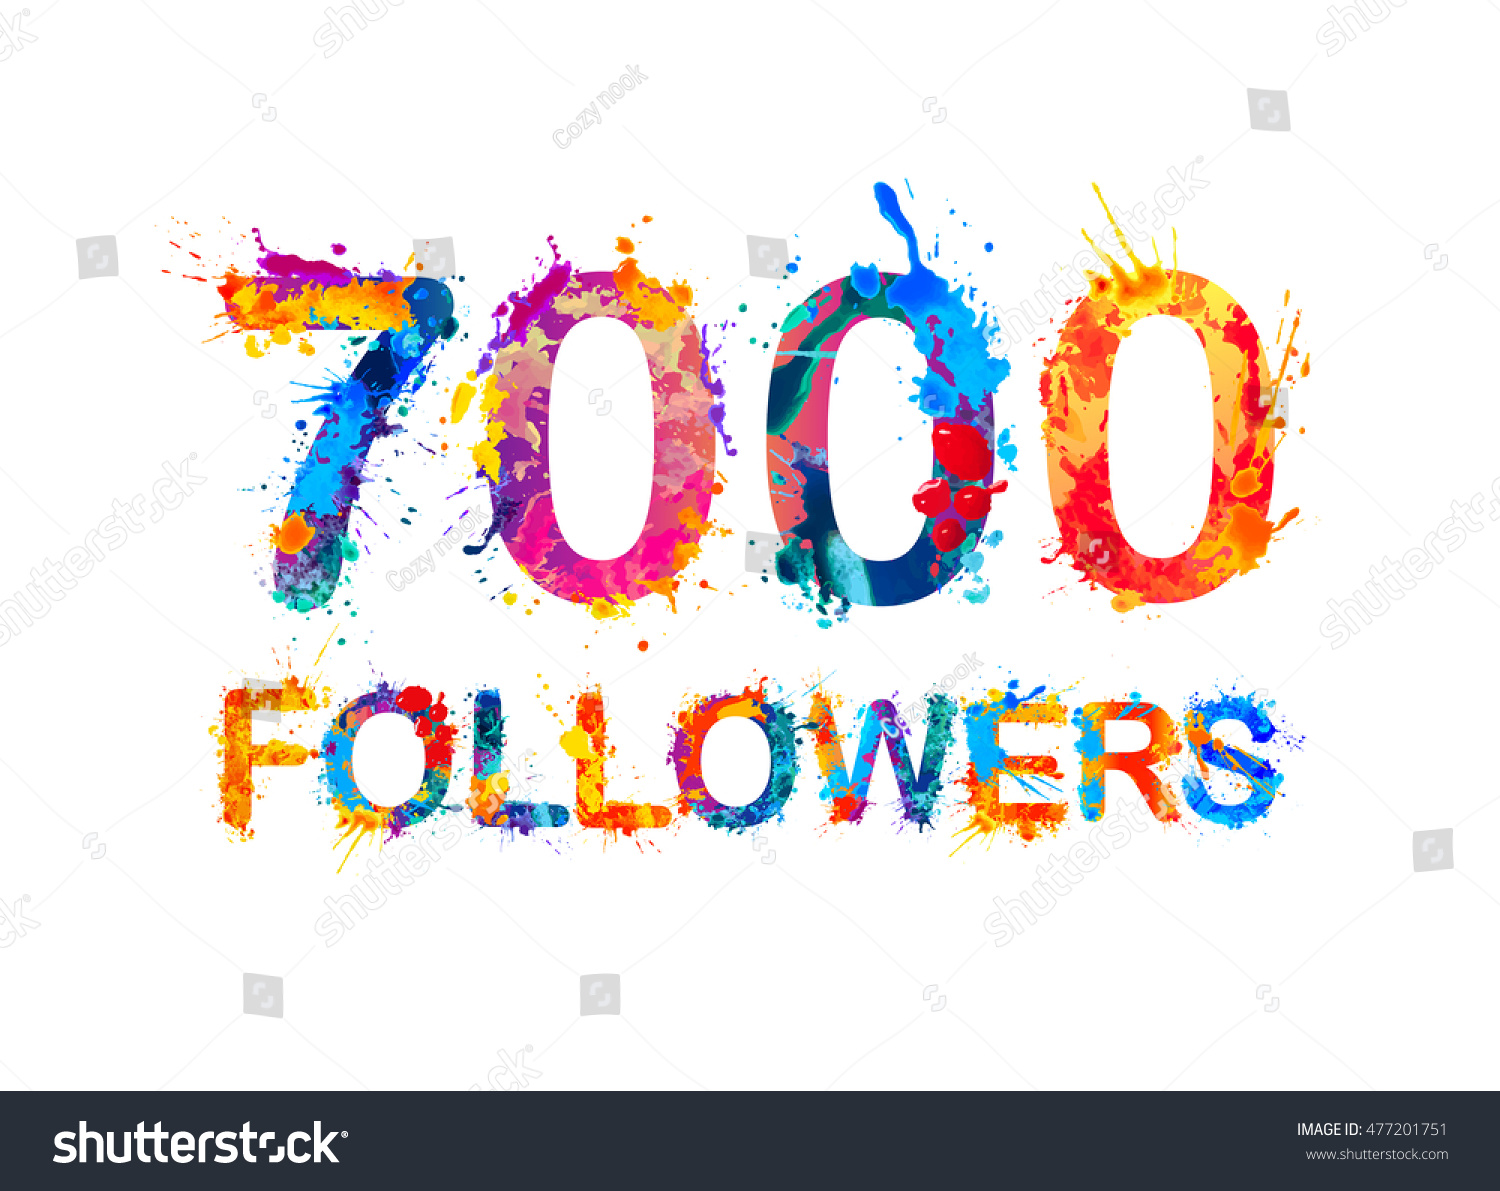 7000 (seven thousand) followers. Splash paint 